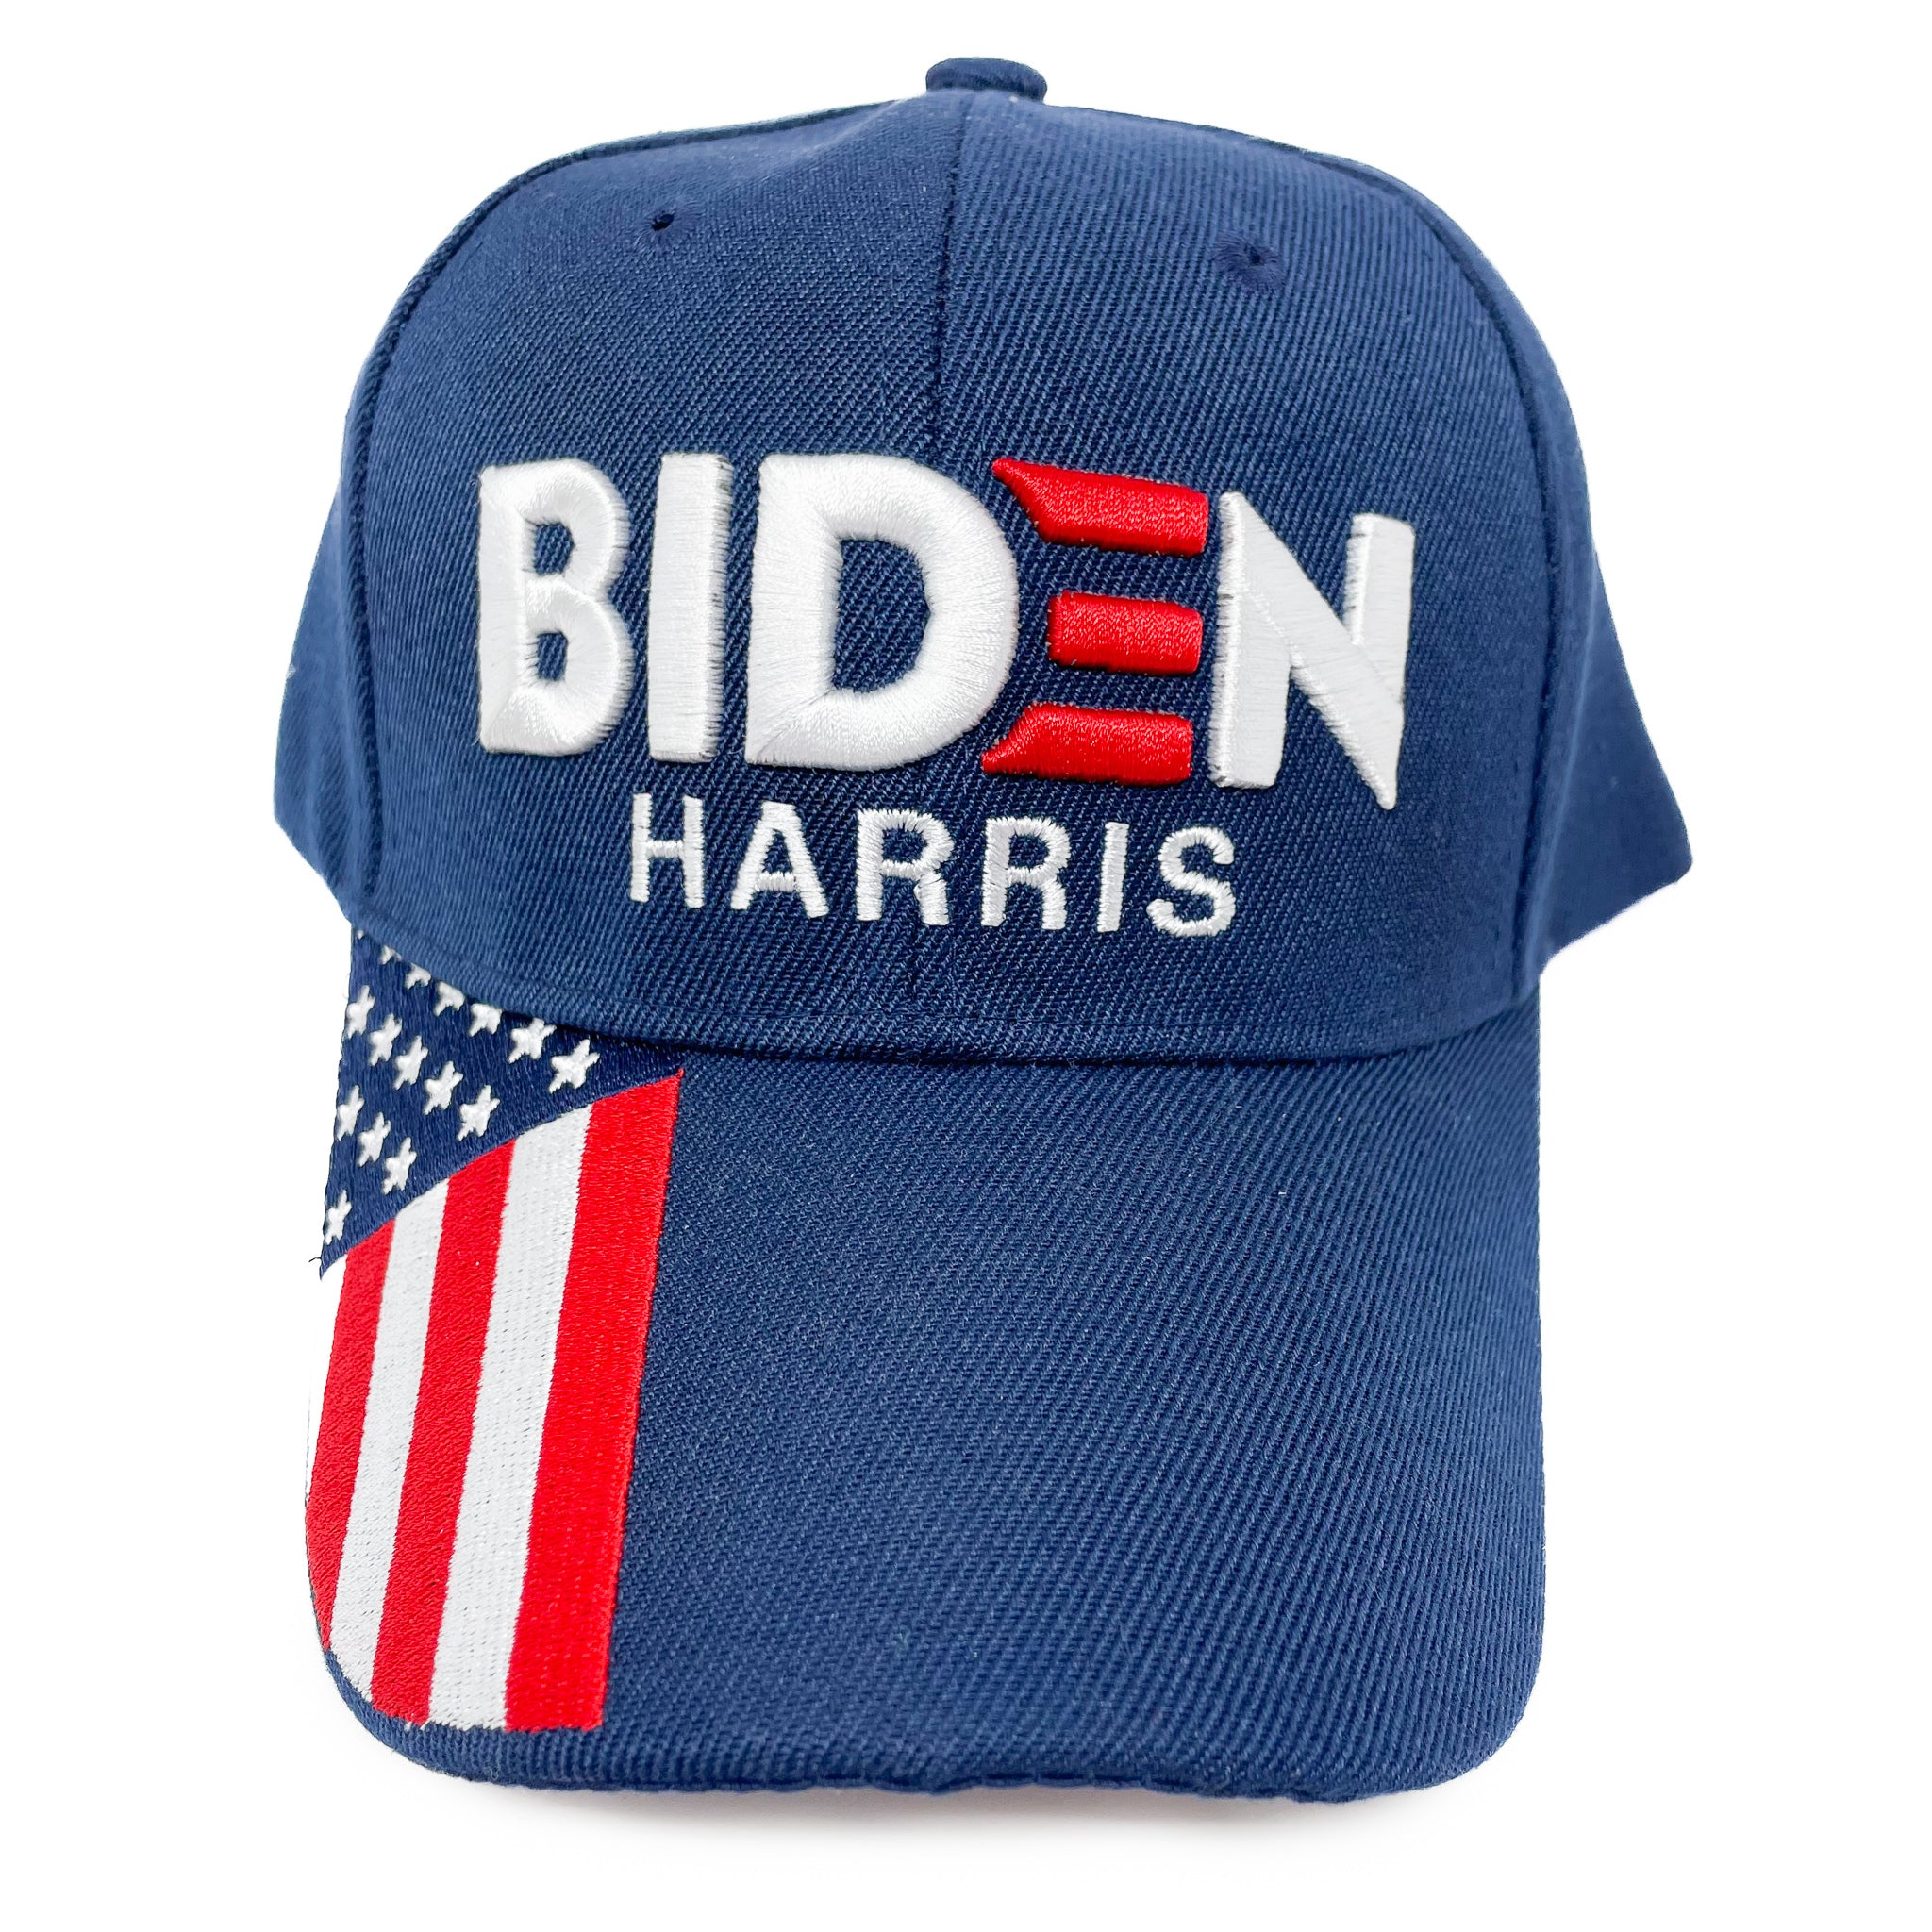 Biden Harris Cap (2 Colors)